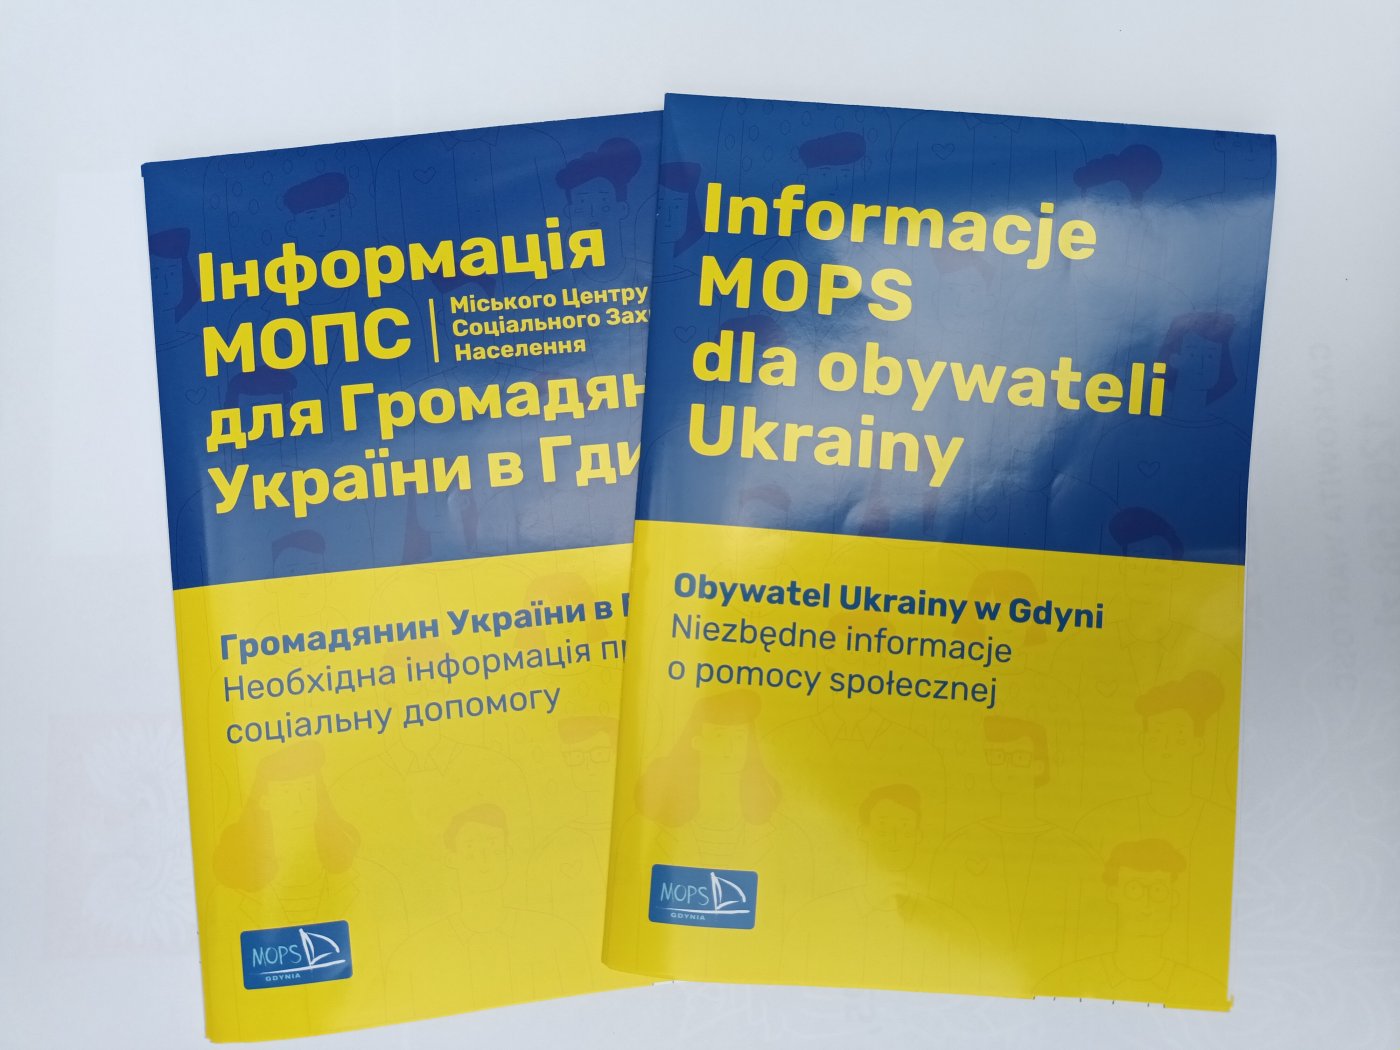 Informator dla obywateli Ukrainy